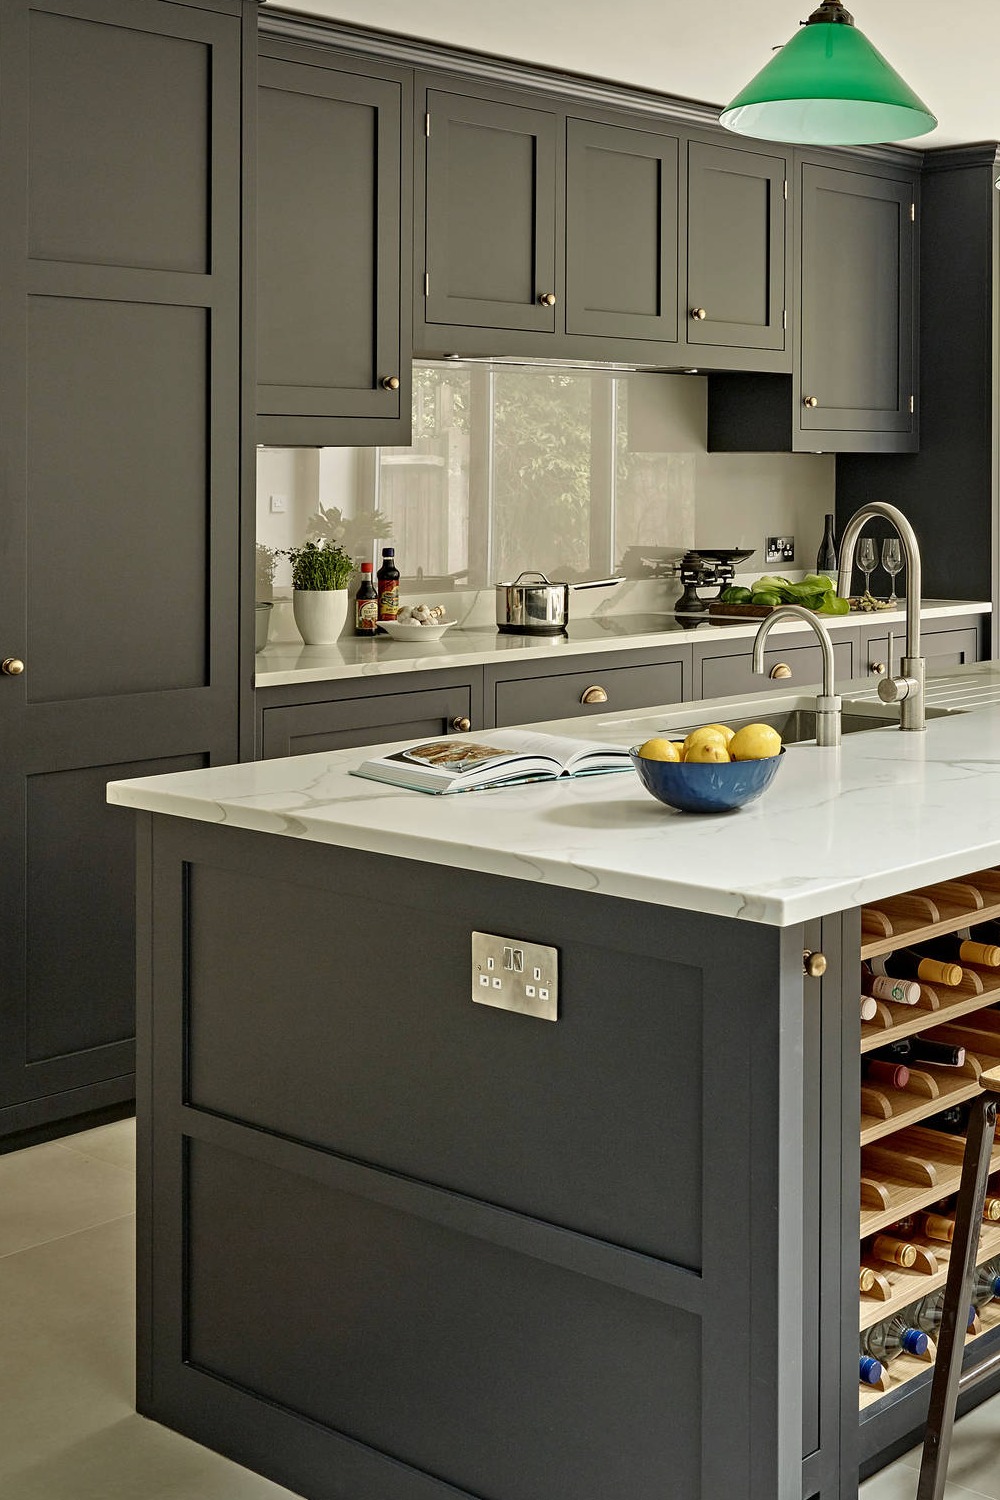 Dark Green Kitchen Cabinets Shaker Style Save White Quartz Countertops Green Pendants